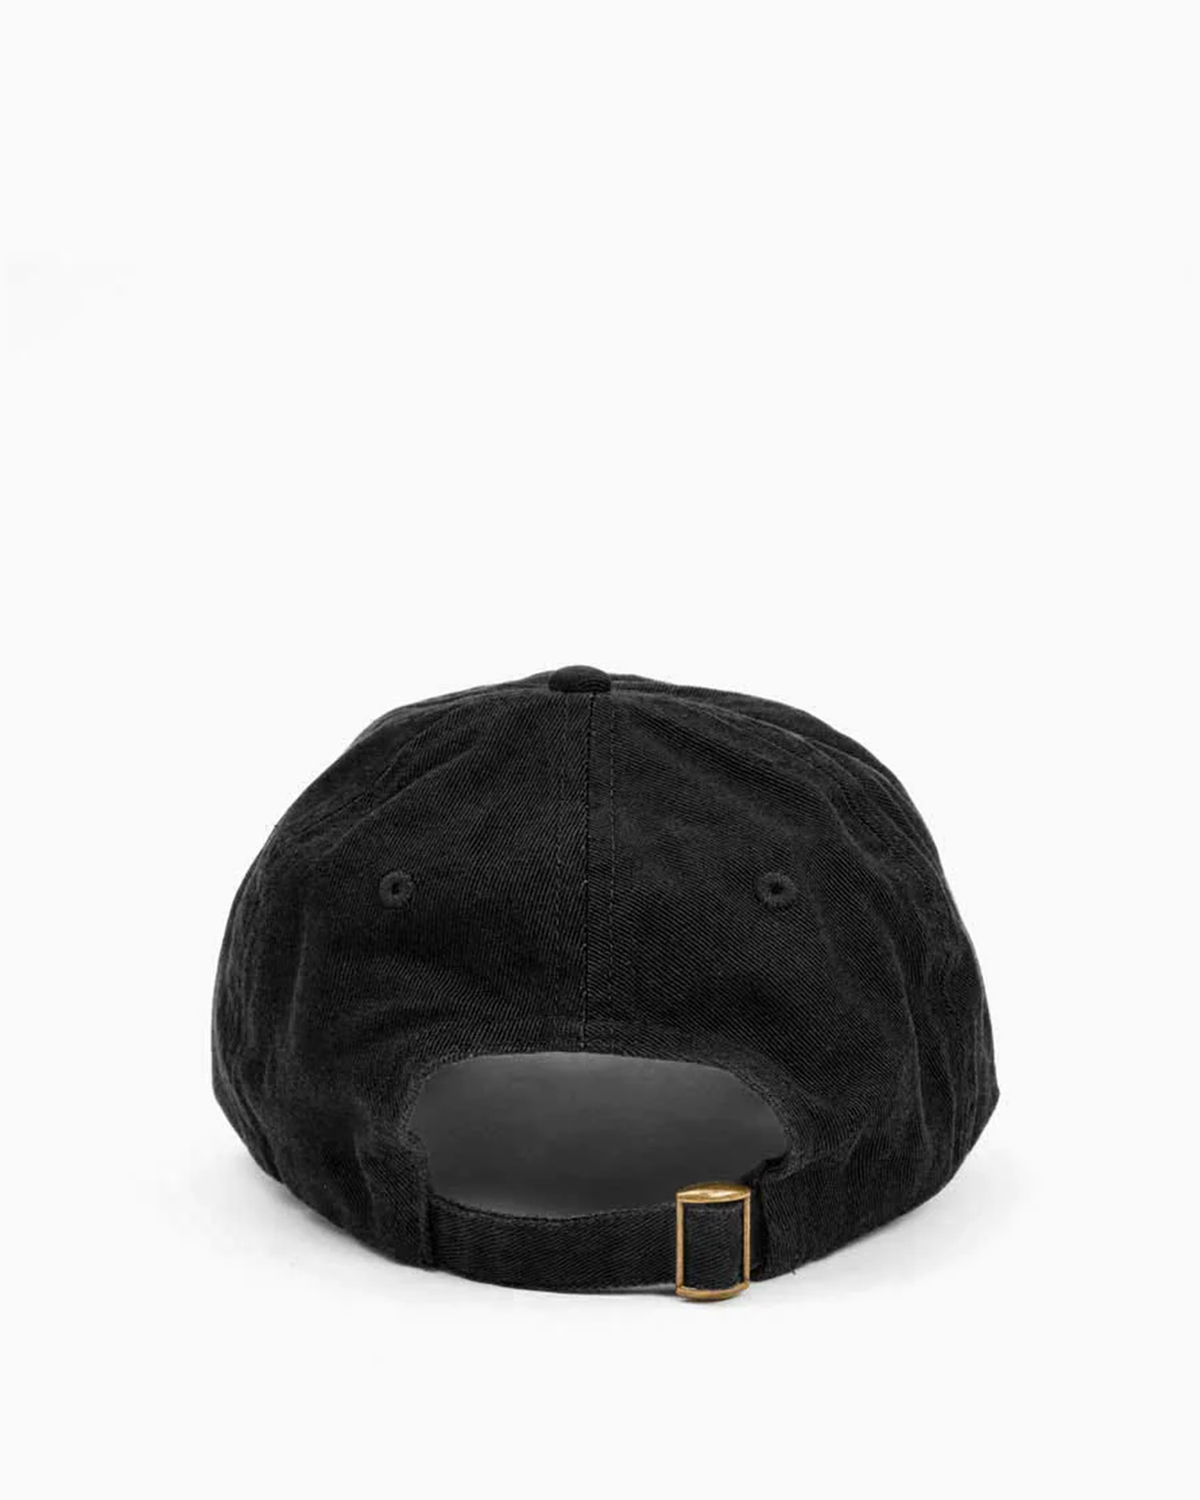 Emb Ciao Baseball Hat in Black w/ Cream